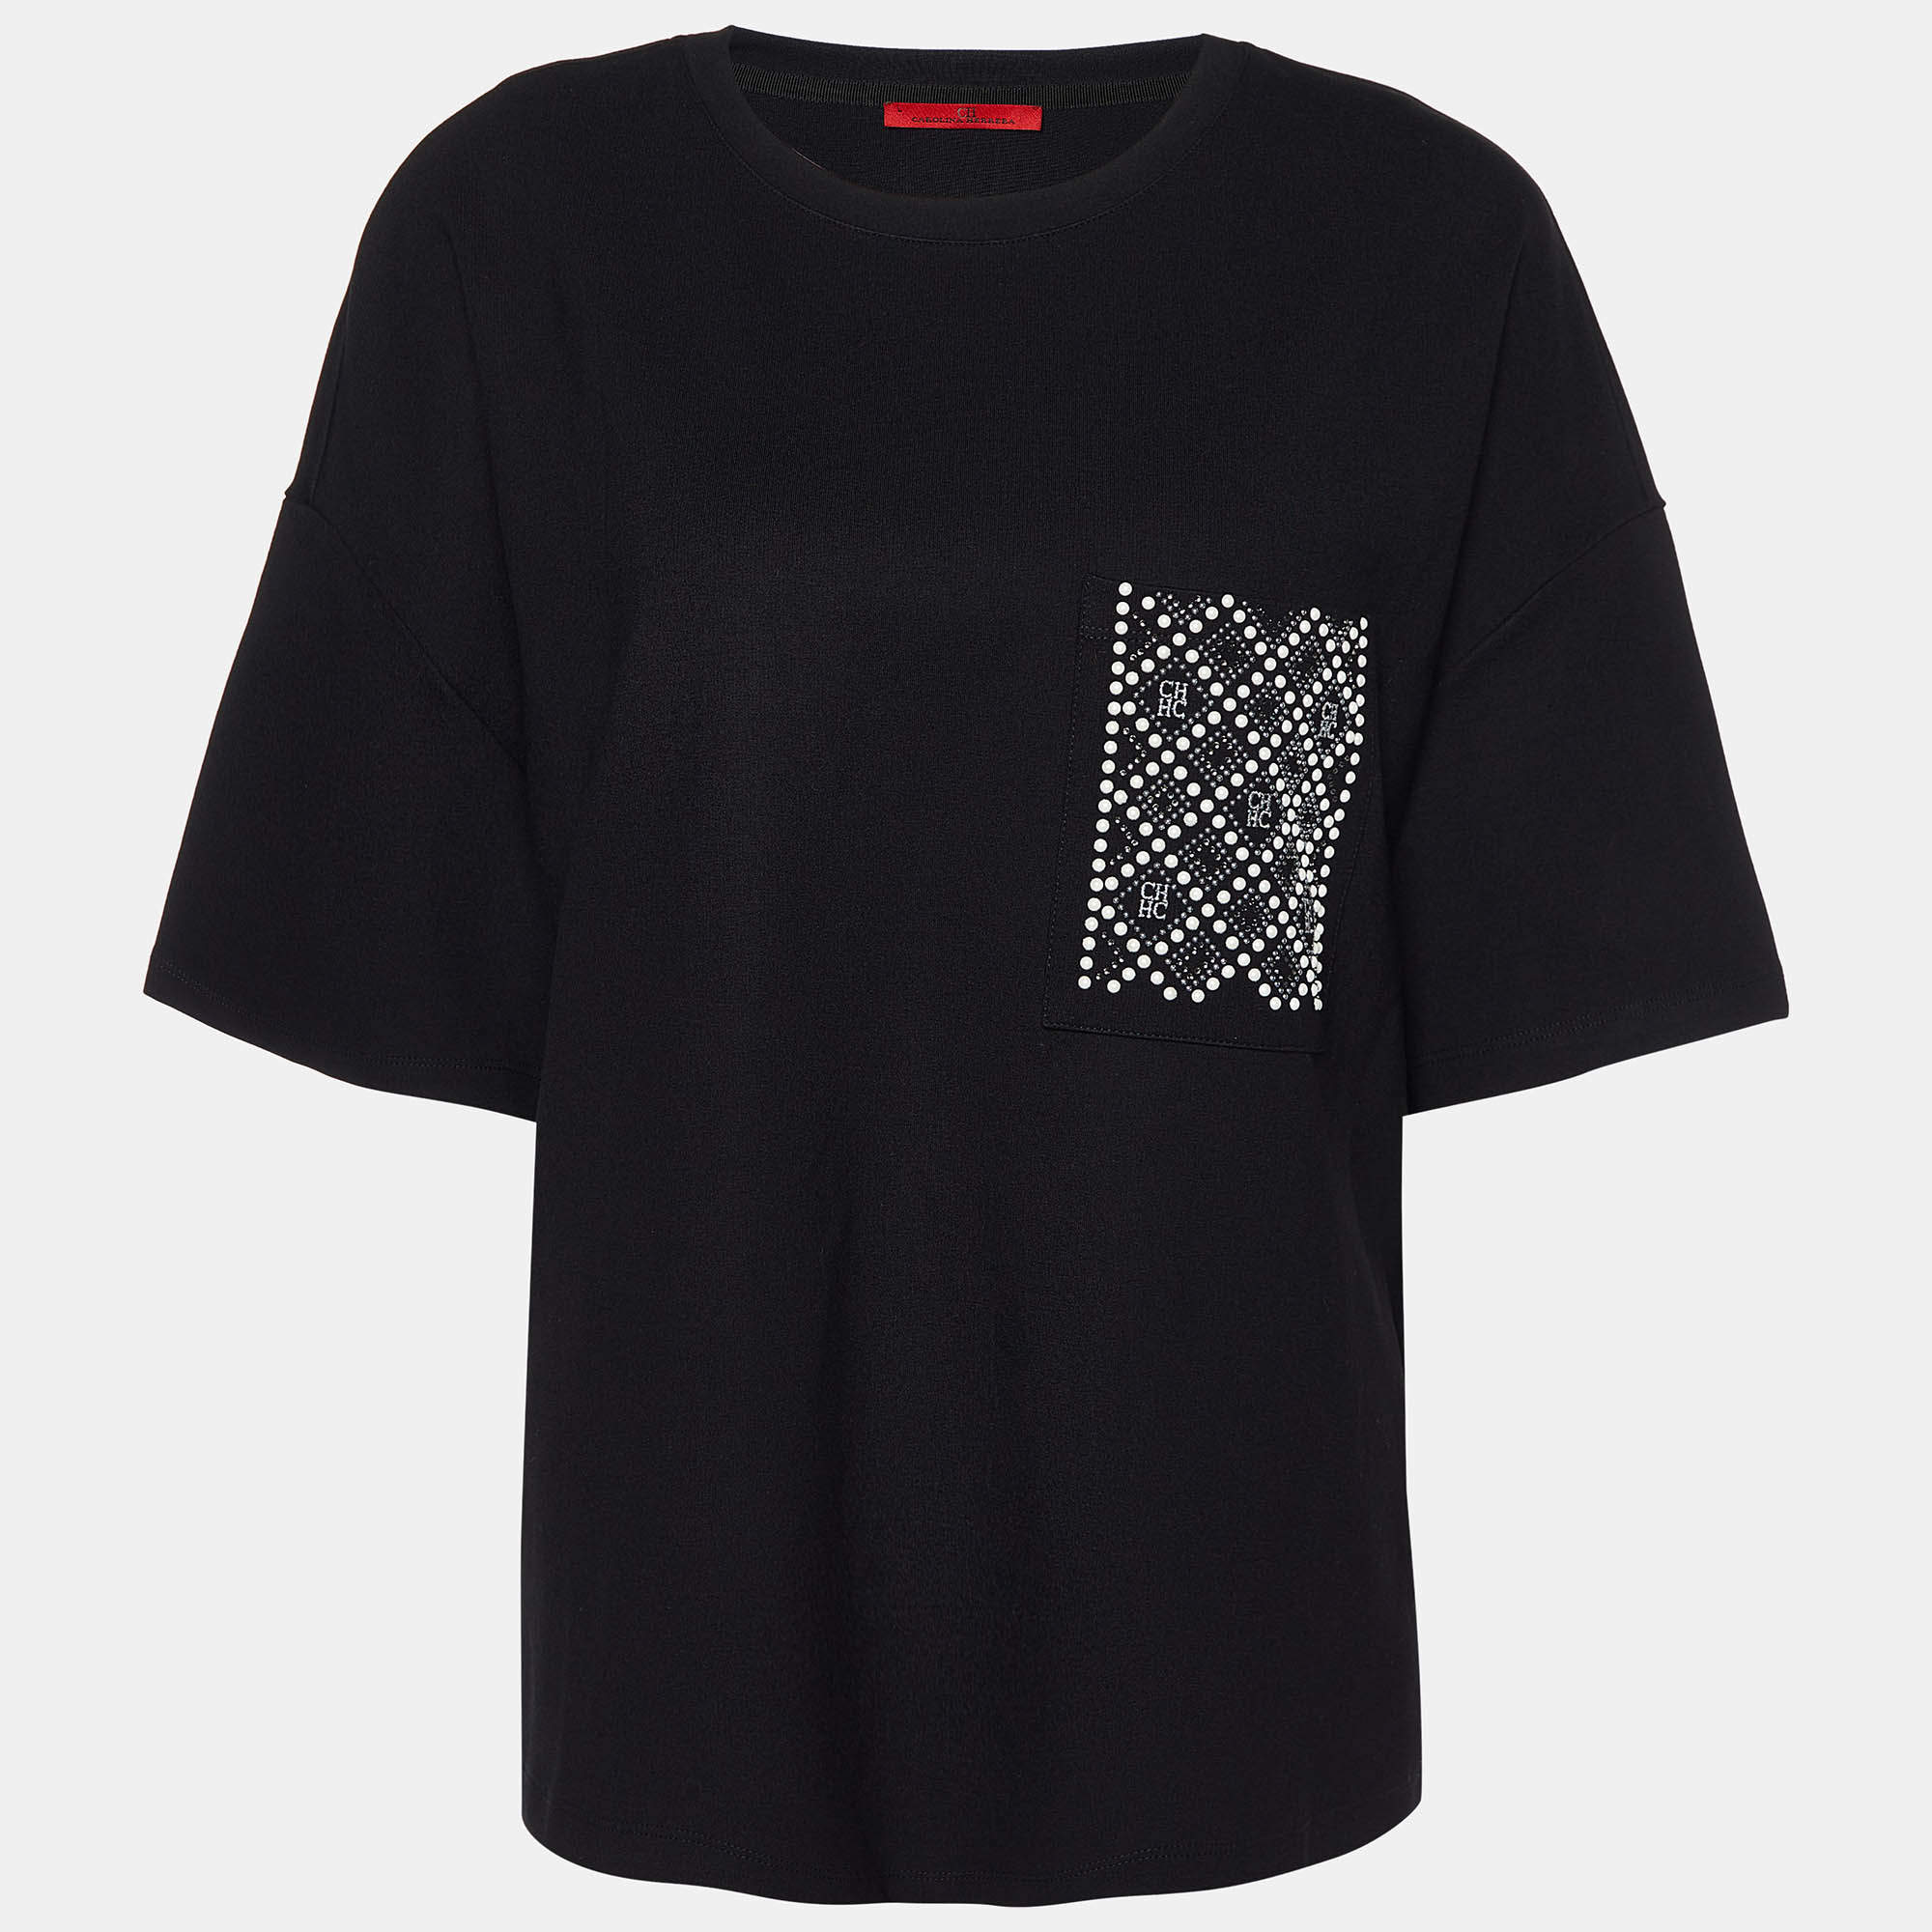 CH Carolina Herrera Black Knit Embellished Pocket T-Shirt L